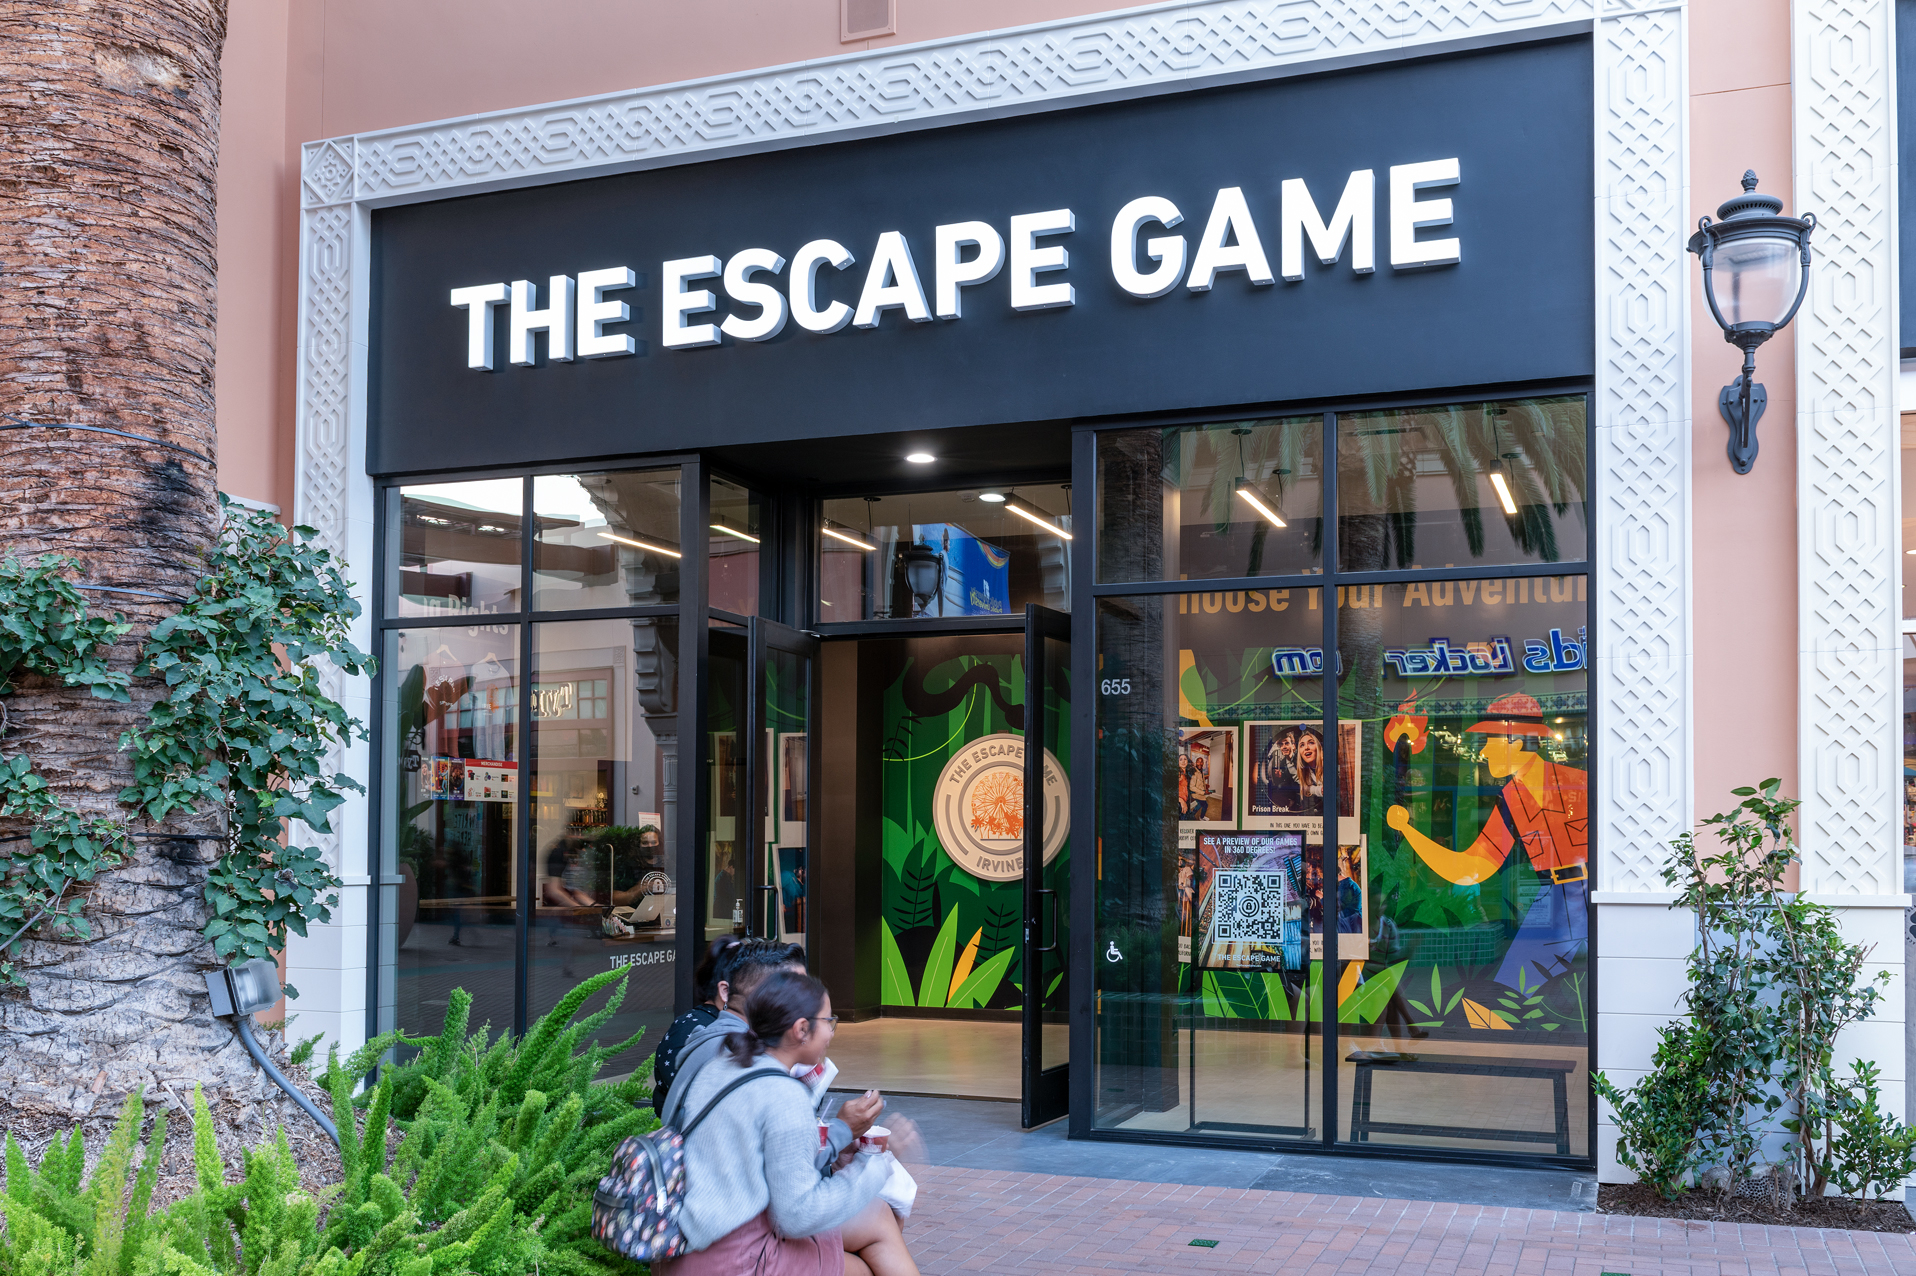 The Escape Game storefront at Irvine Spectrum Center